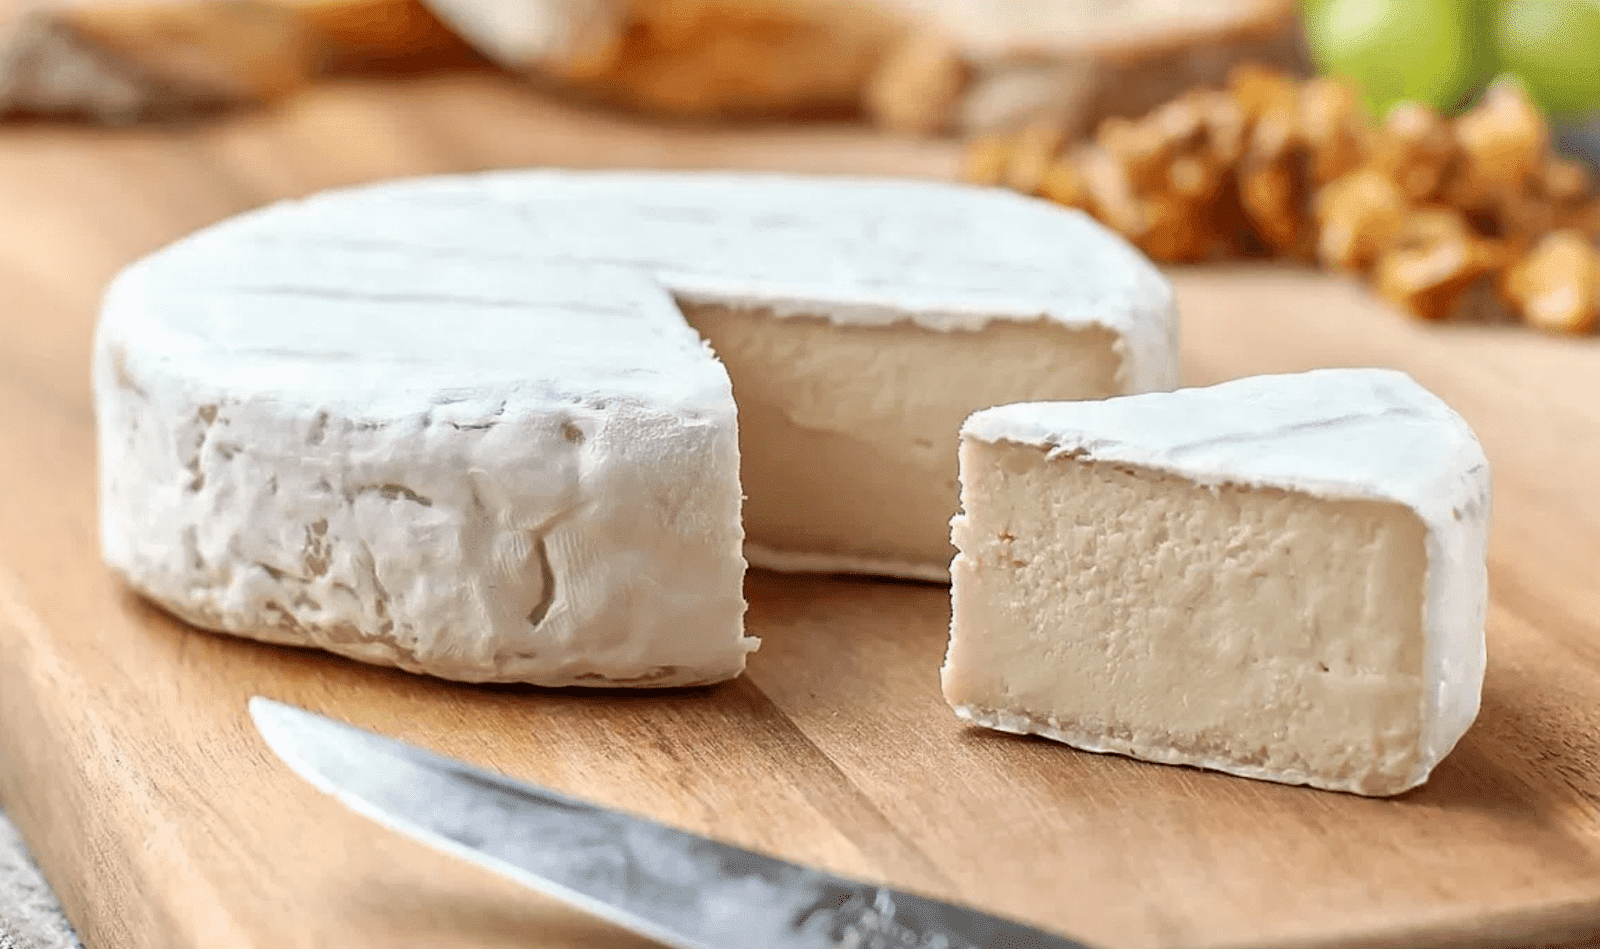 How to Make Vegan Camembert Like a Pro